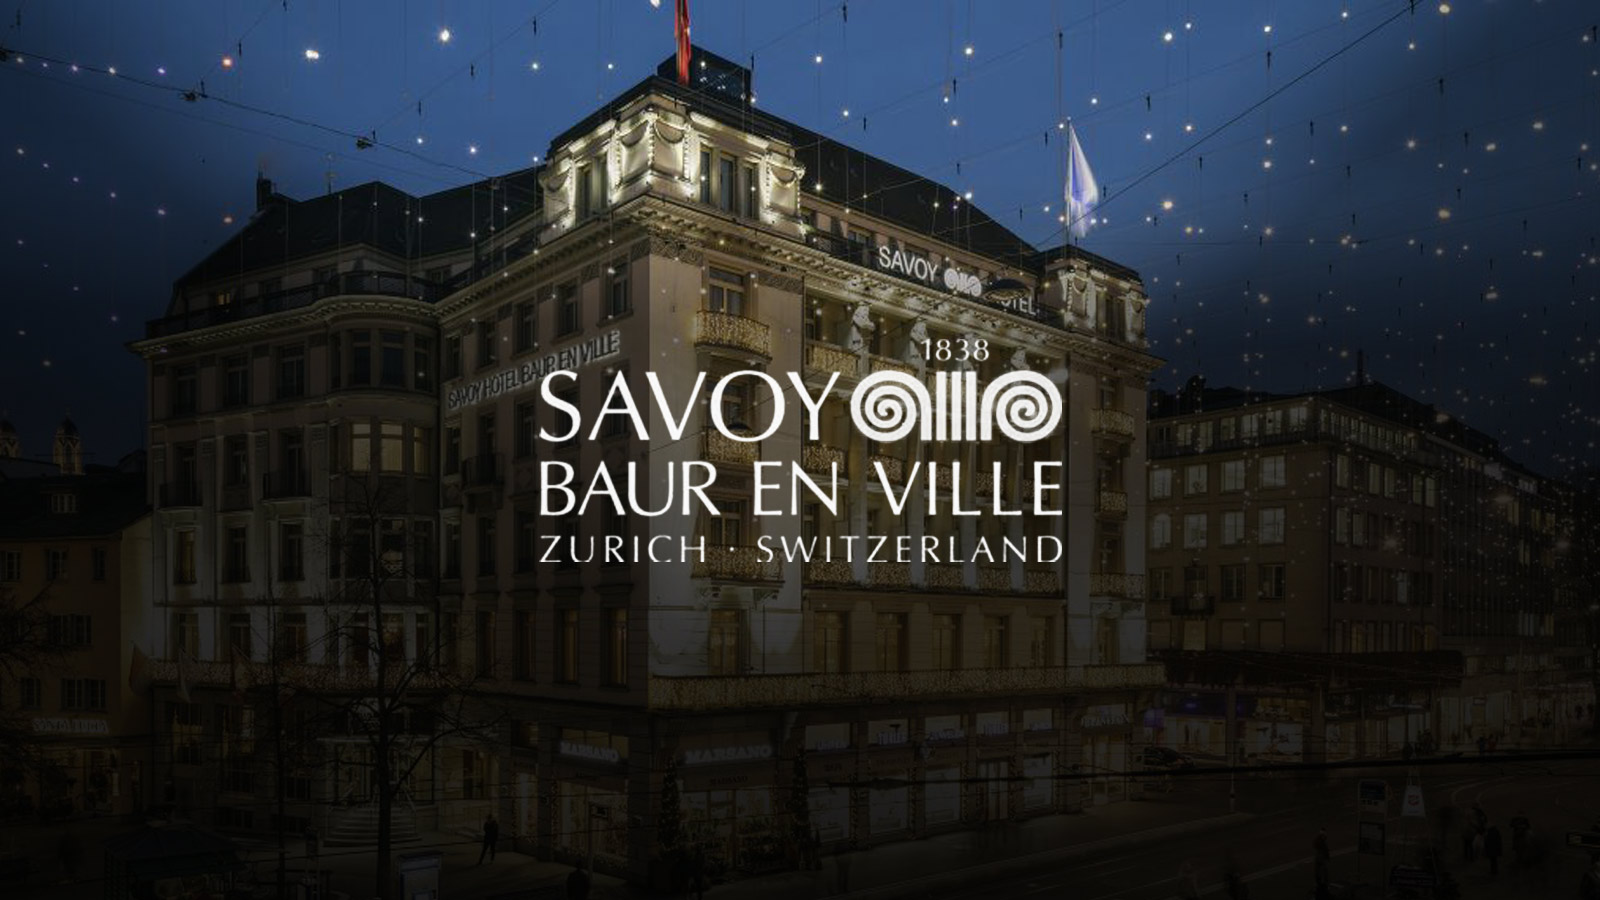 Savoy-Hotel-Baur-en-Ville-logo